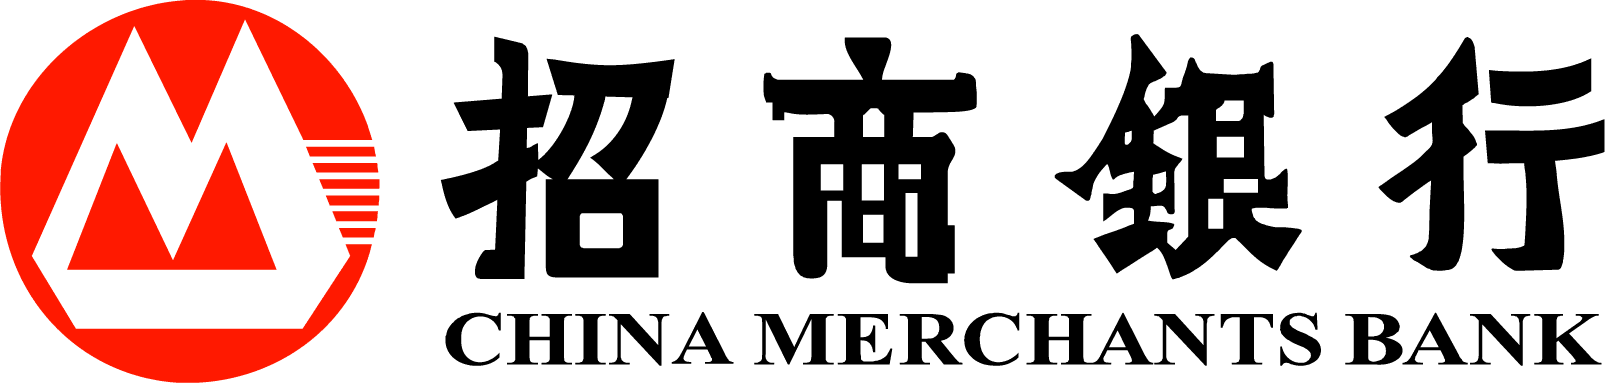 China Merchants Bank Logo Color